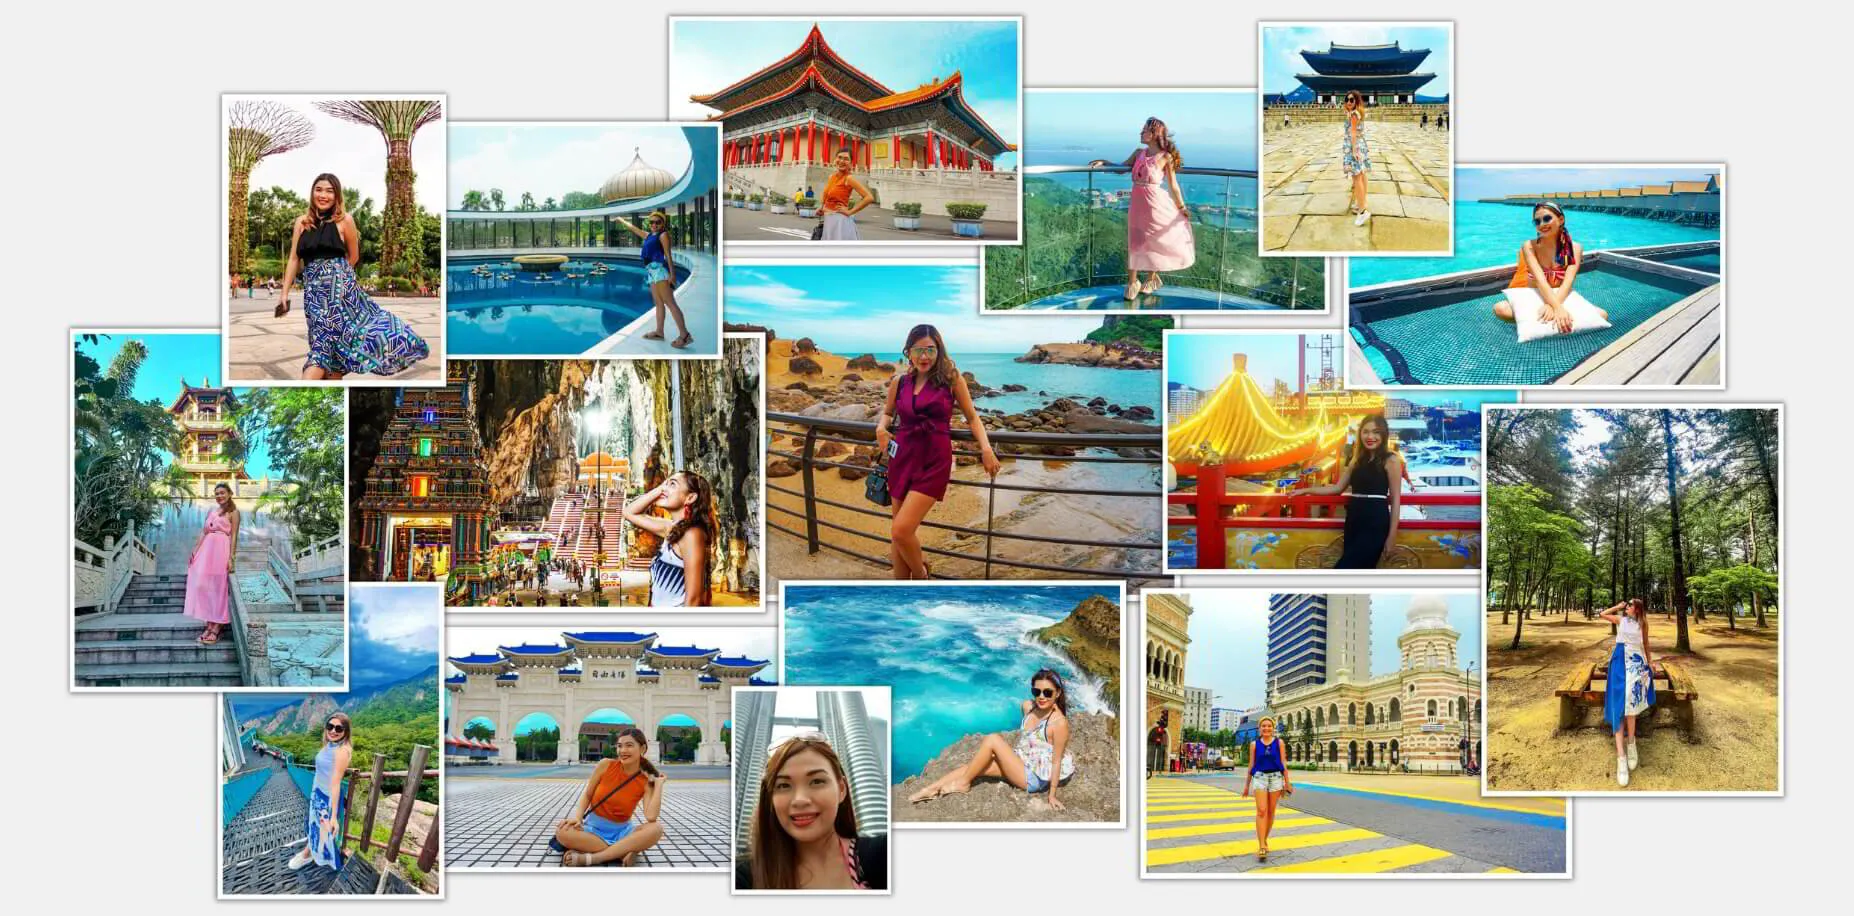 pinoy online travel biz reviews